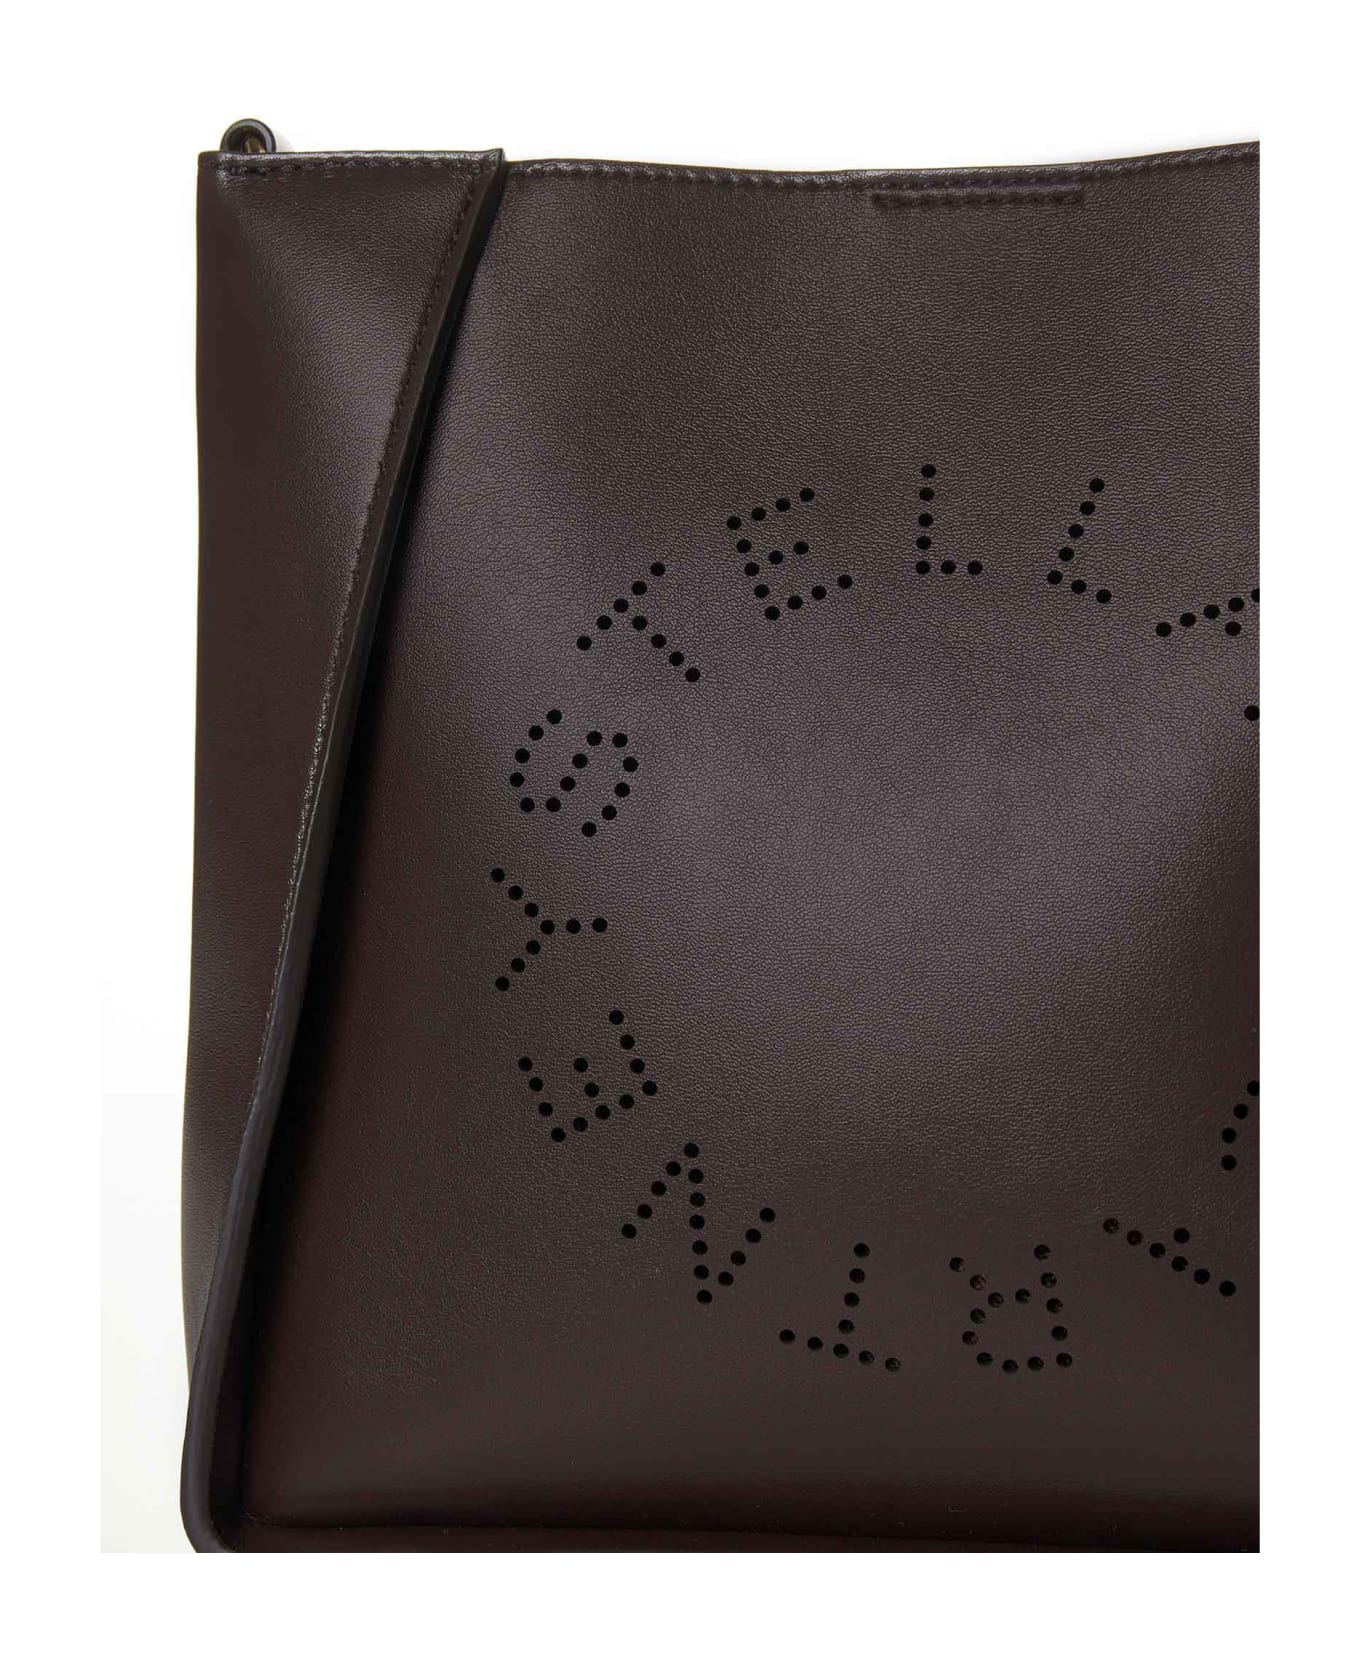 Stella McCartney Shoulder Bag - Chocolate